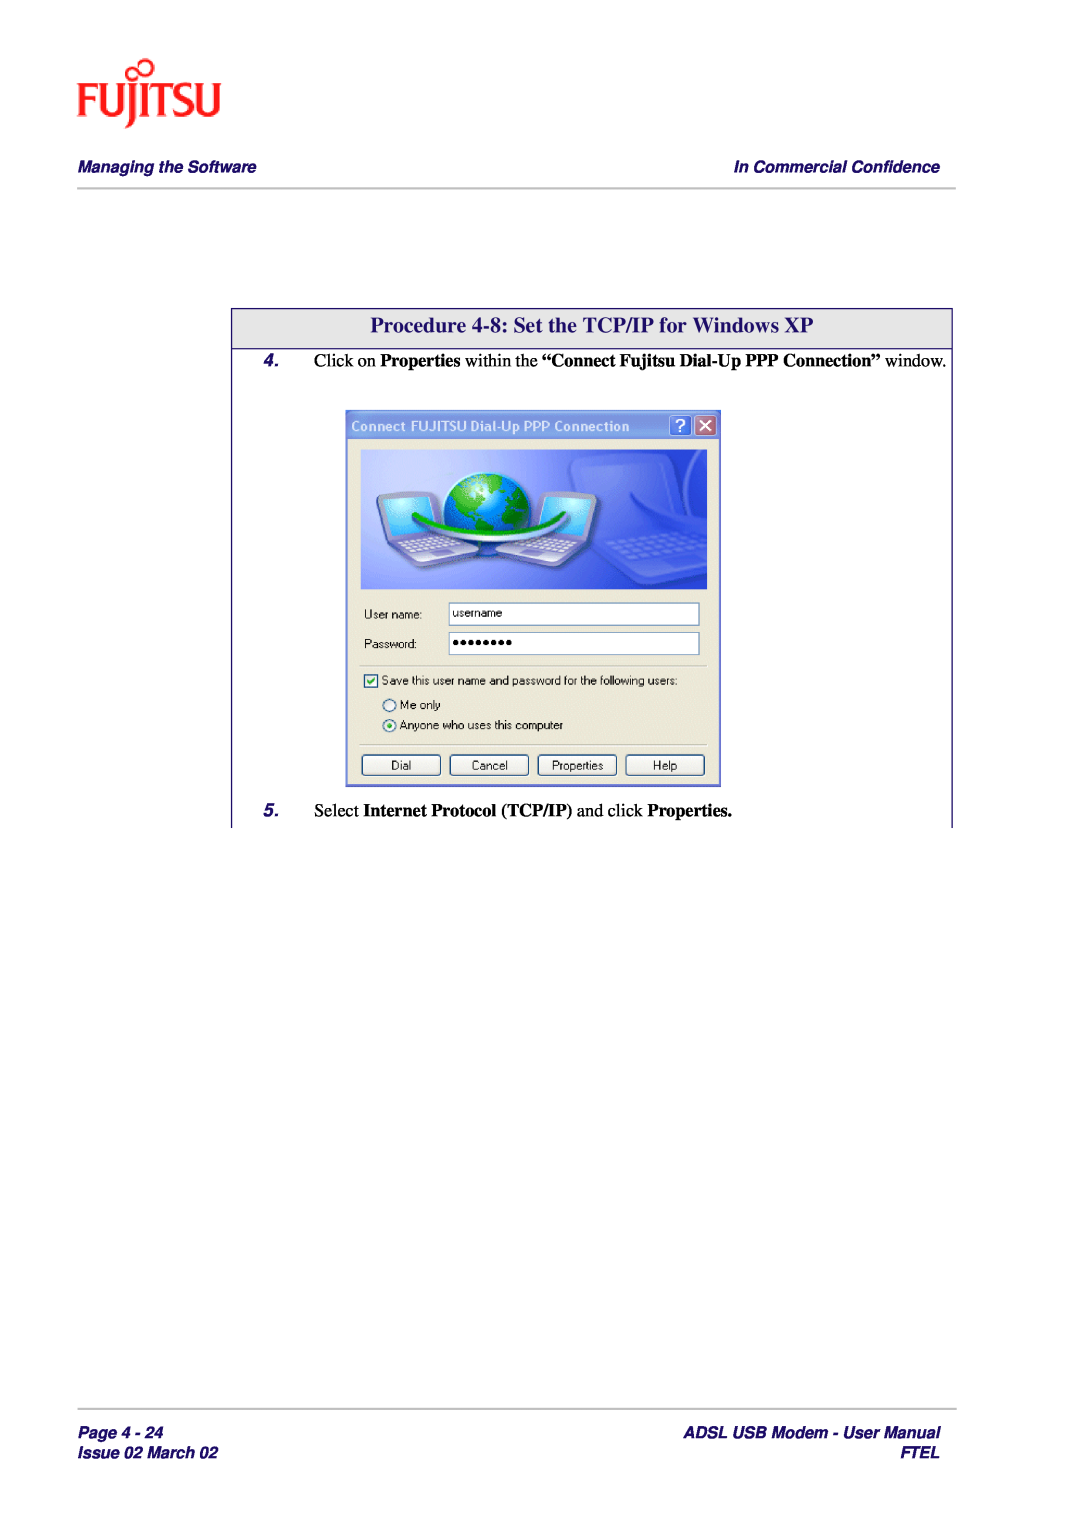 Fujitsu 3XAX-00803AAS Procedure 4-8 Set the TCP/IP for Windows XP, Select Internet Protocol TCP/IP and click Properties 